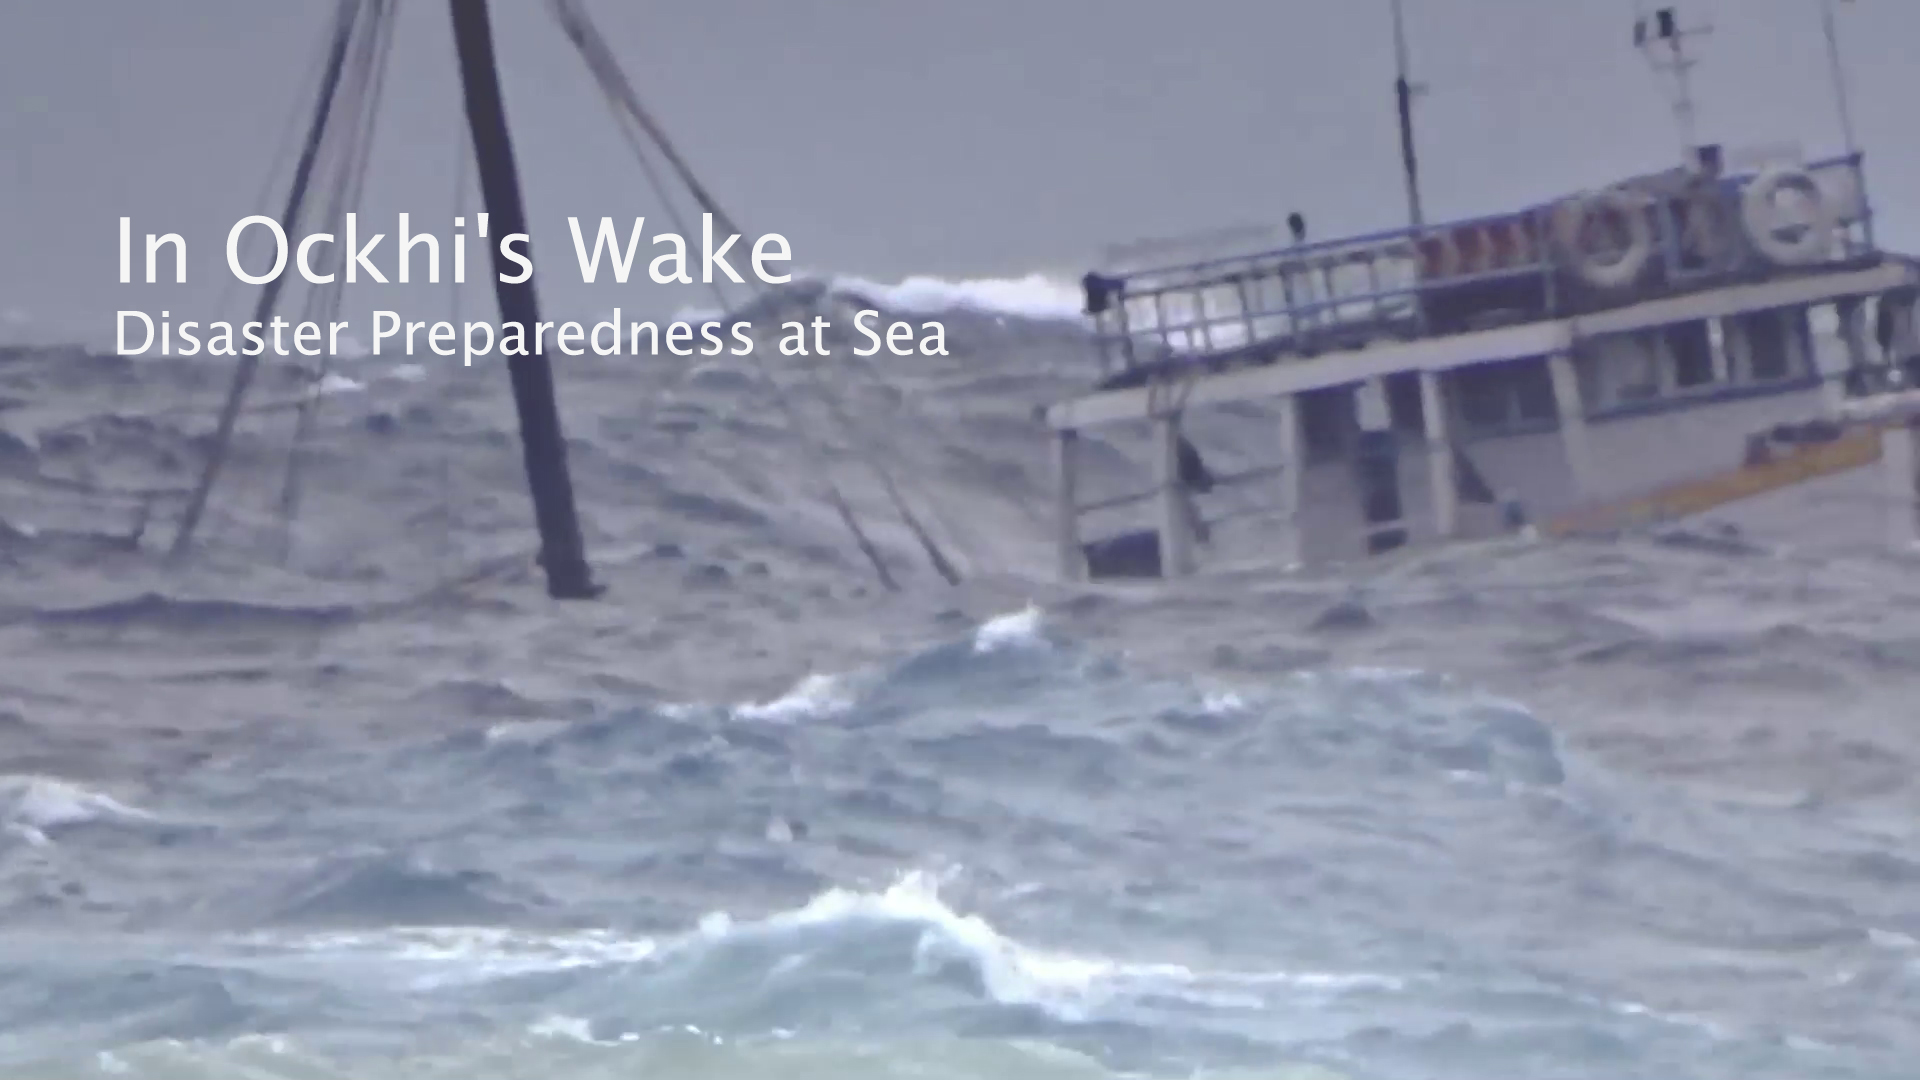 Film: In Ockhi’s Wake: Disaster Preparedness at Sea